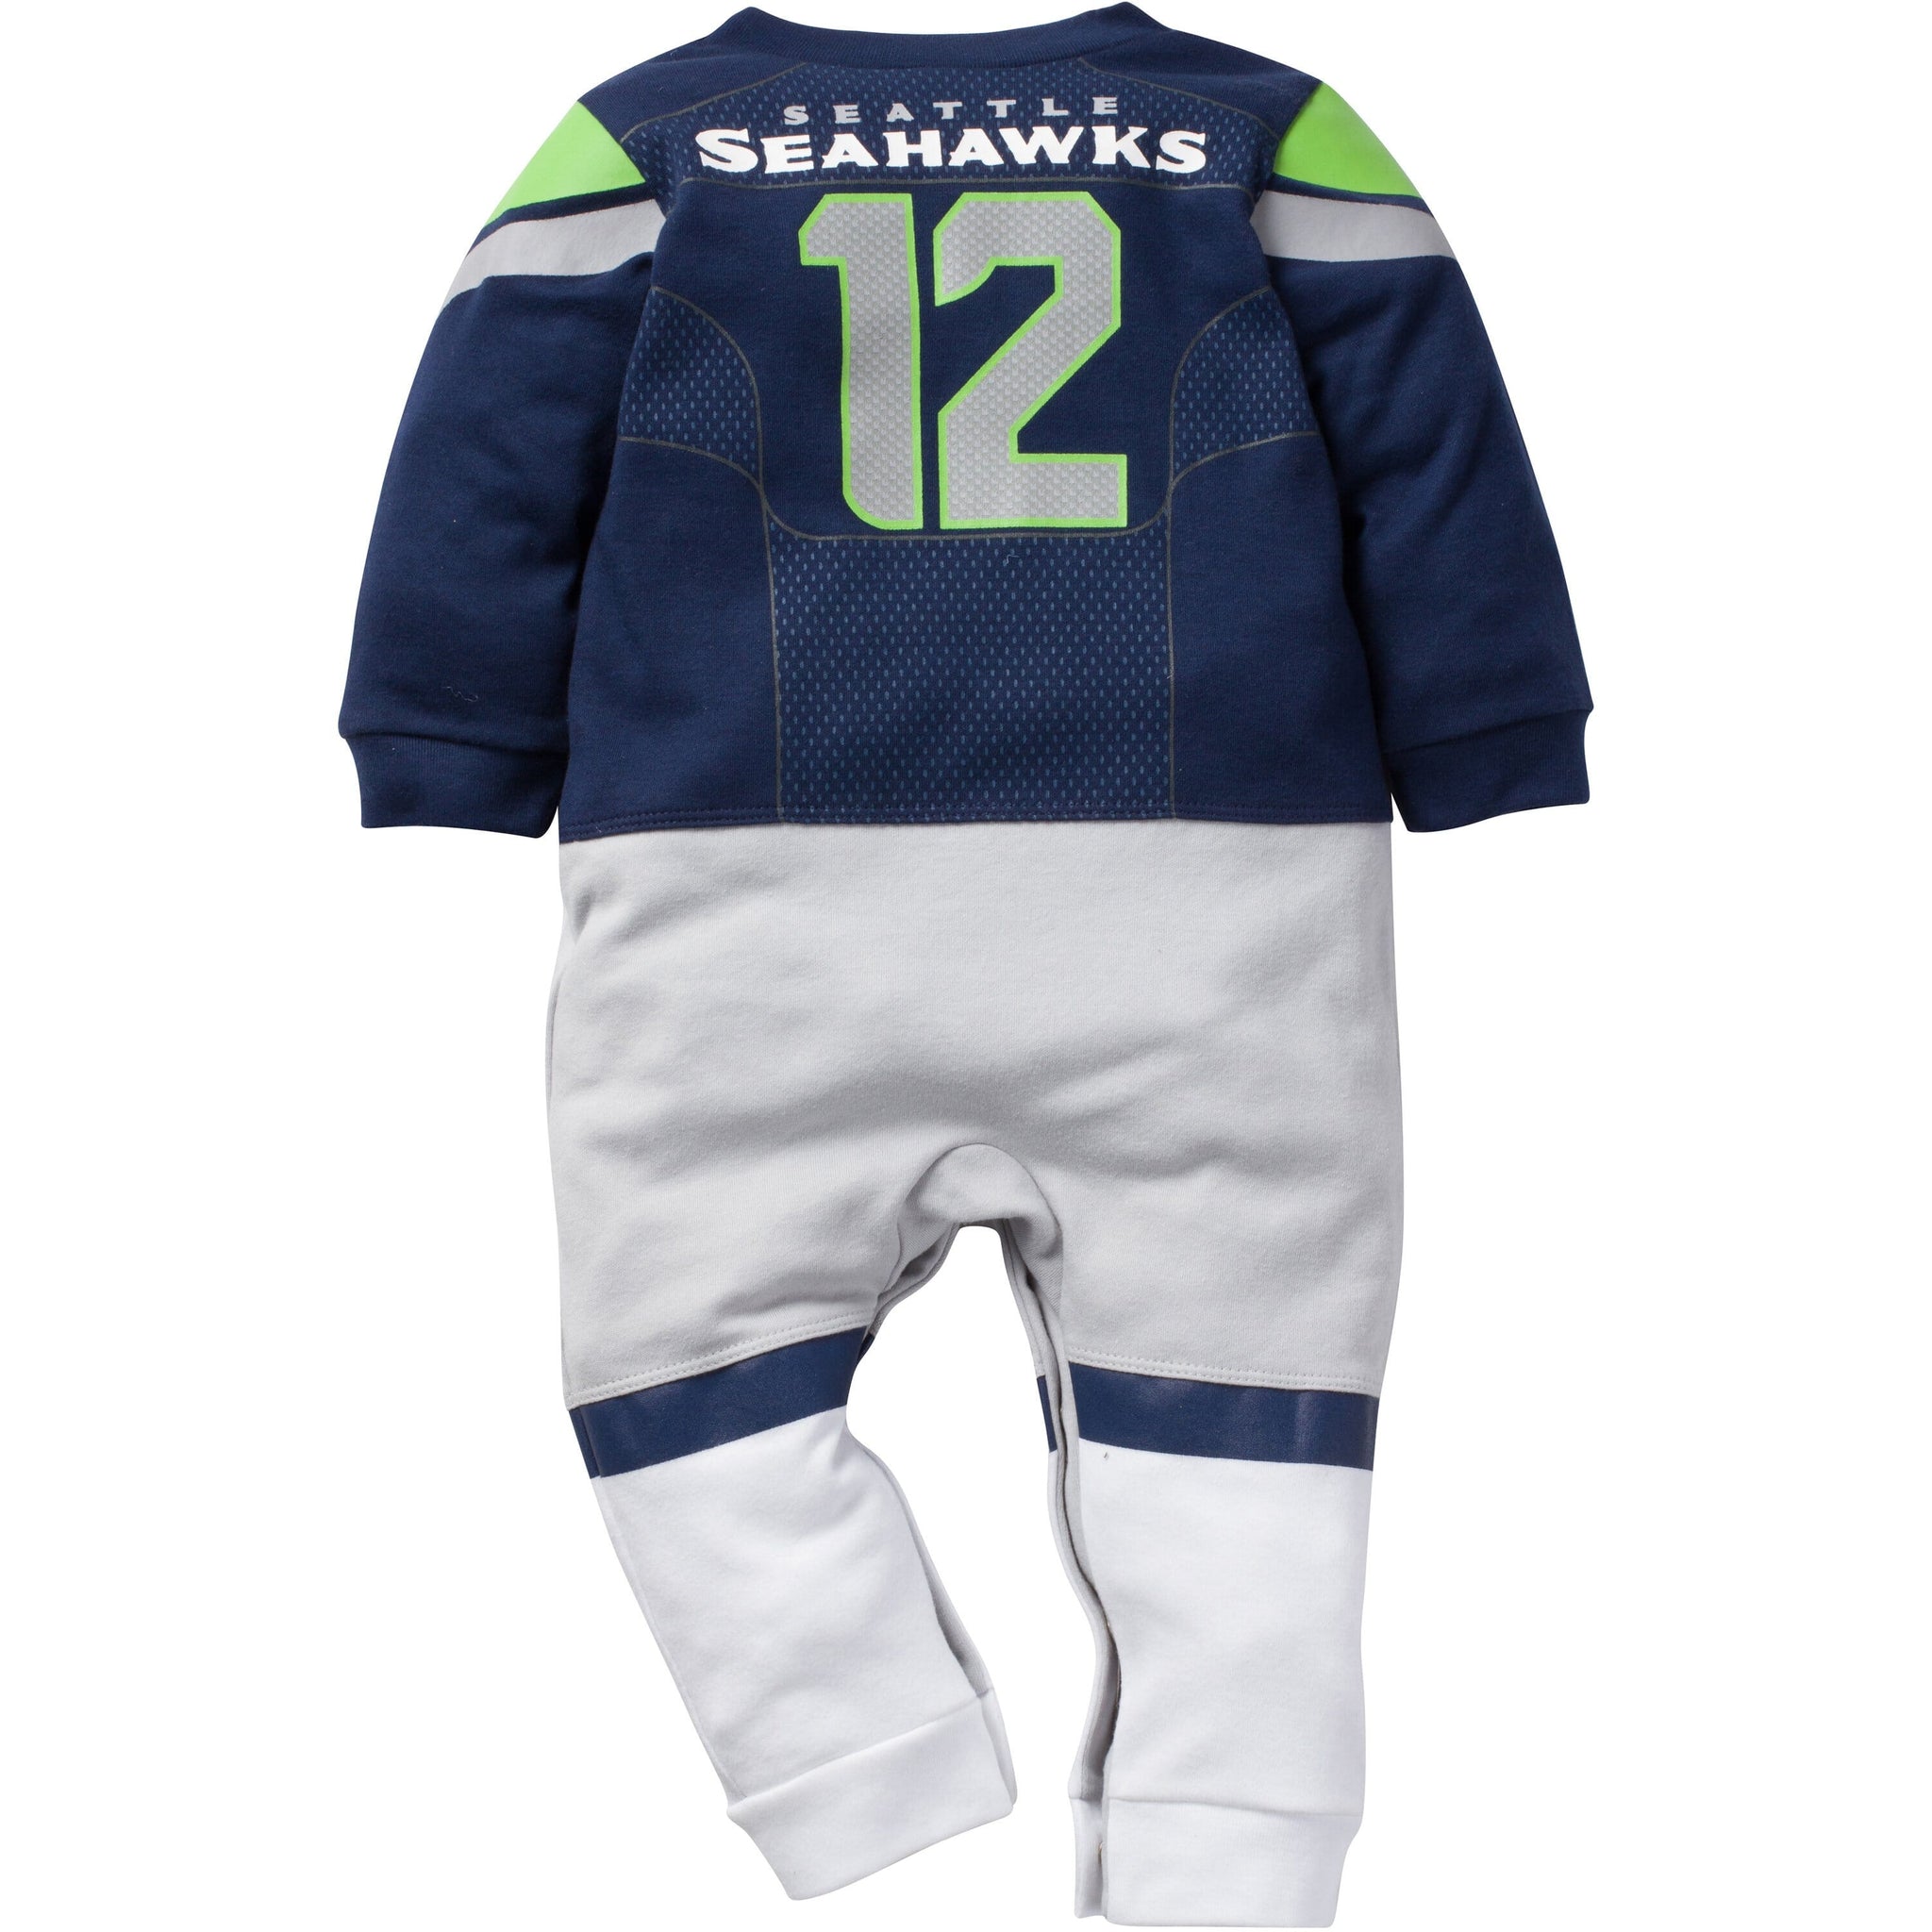 Seattle Seahawks Baby Clothing 